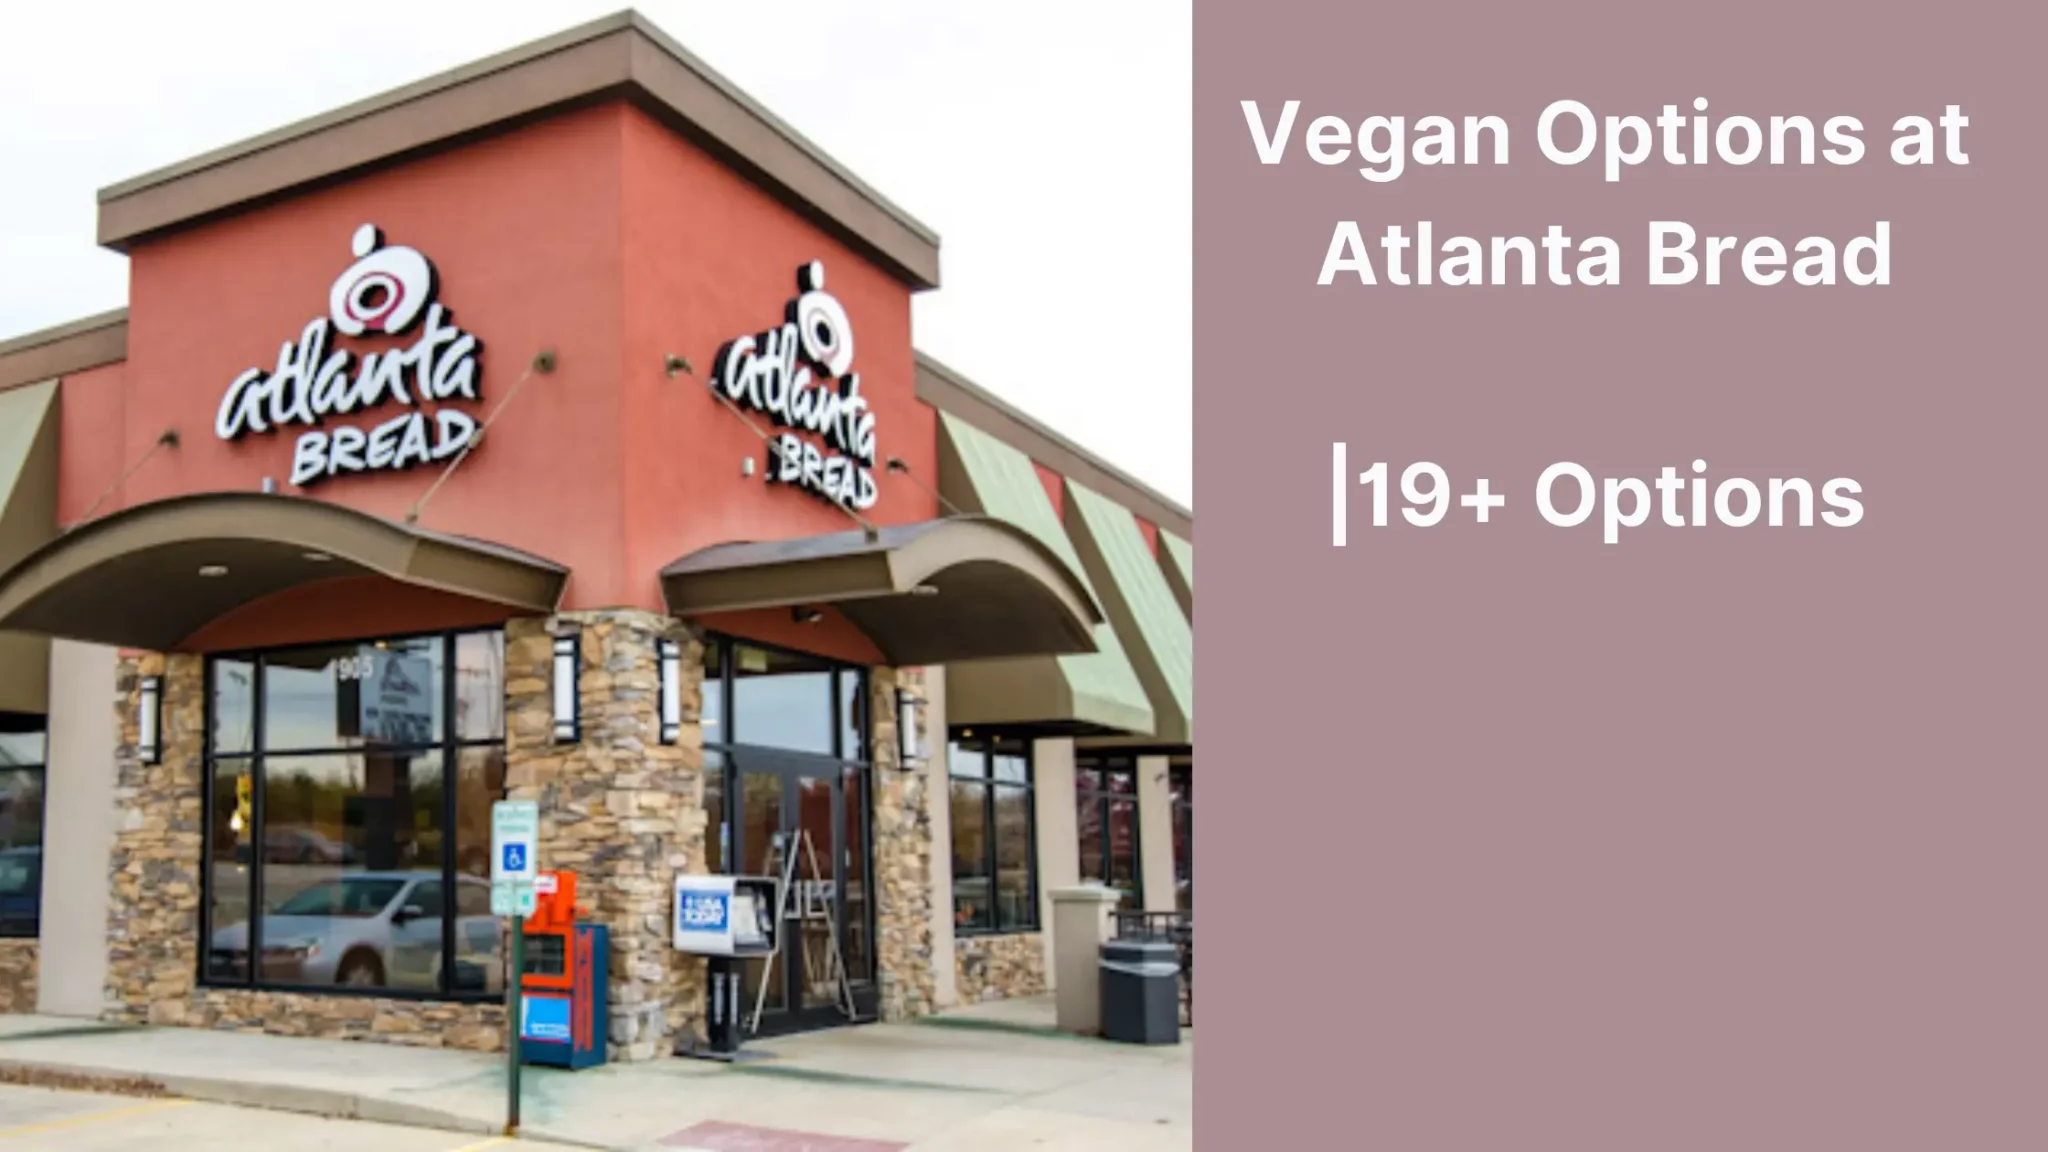 Vegan Options at Atlanta Bread